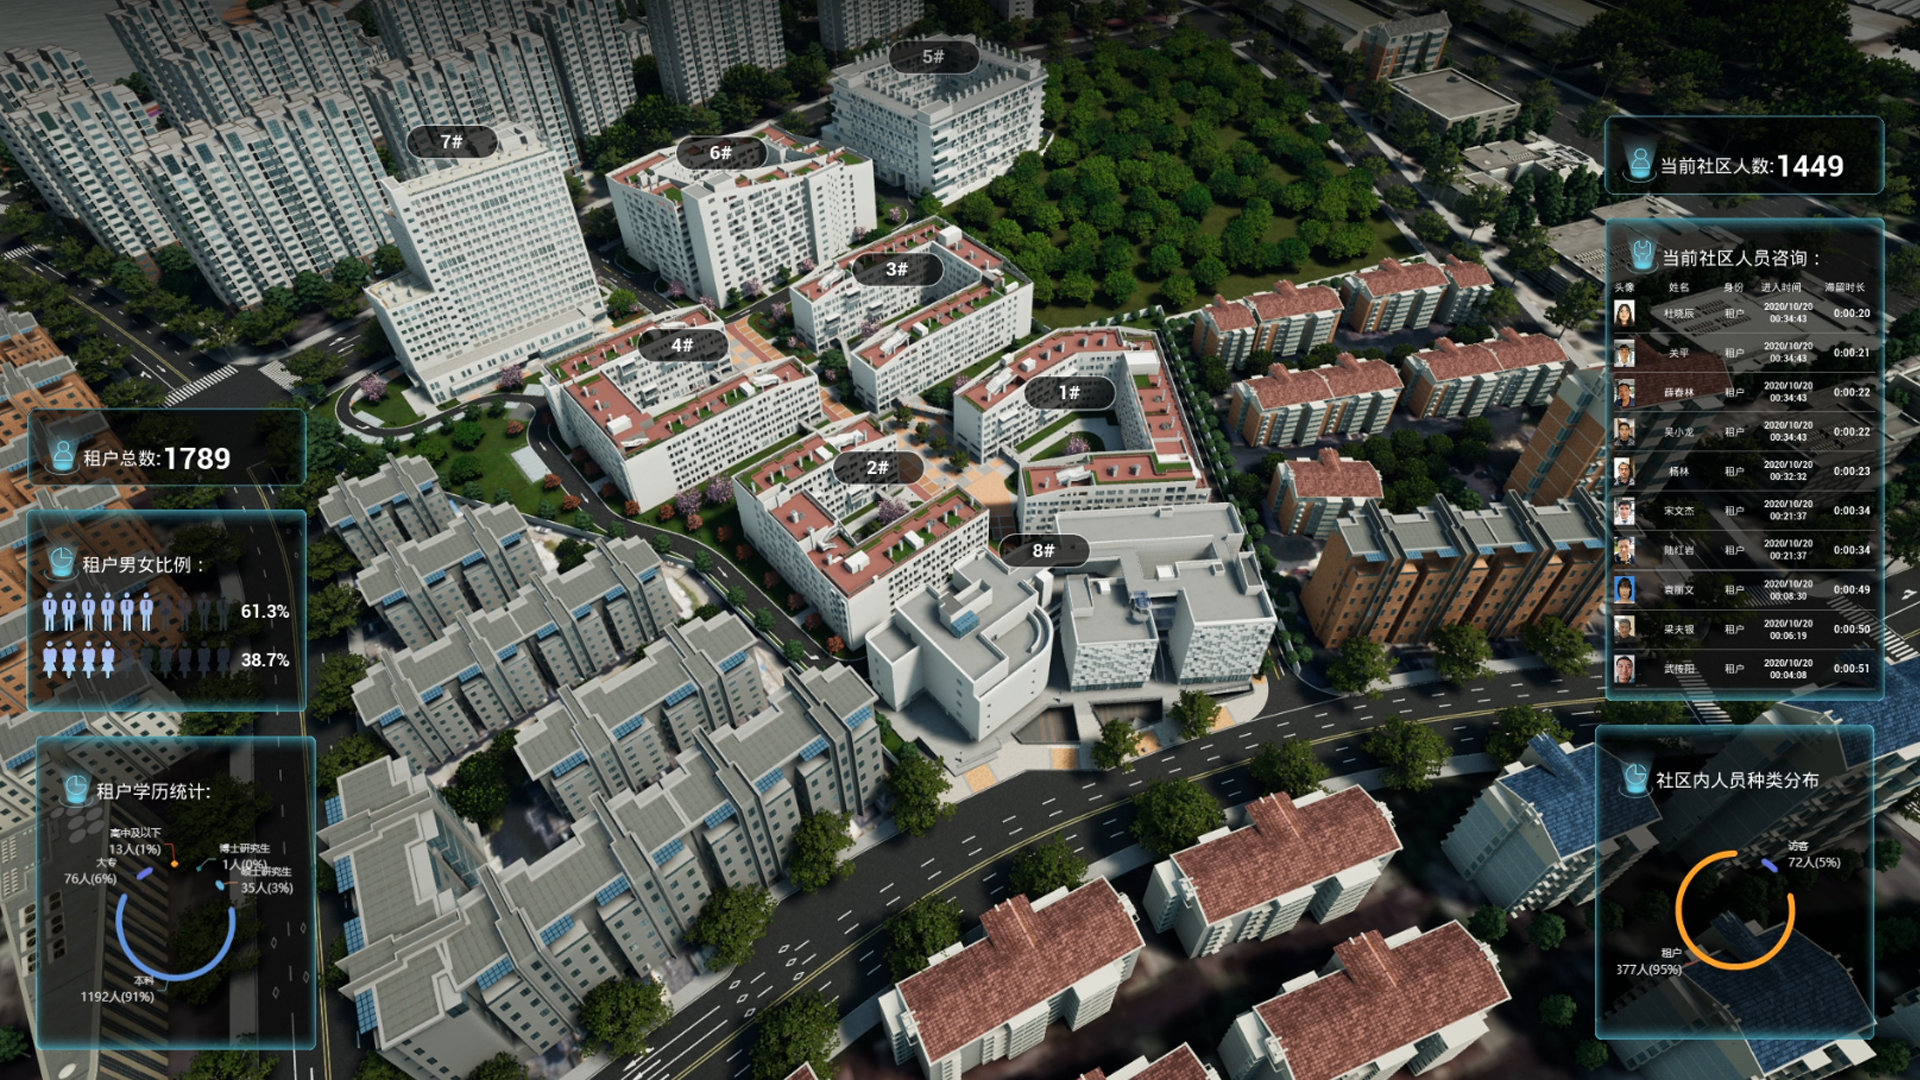 A public rental housing project in Shanghai